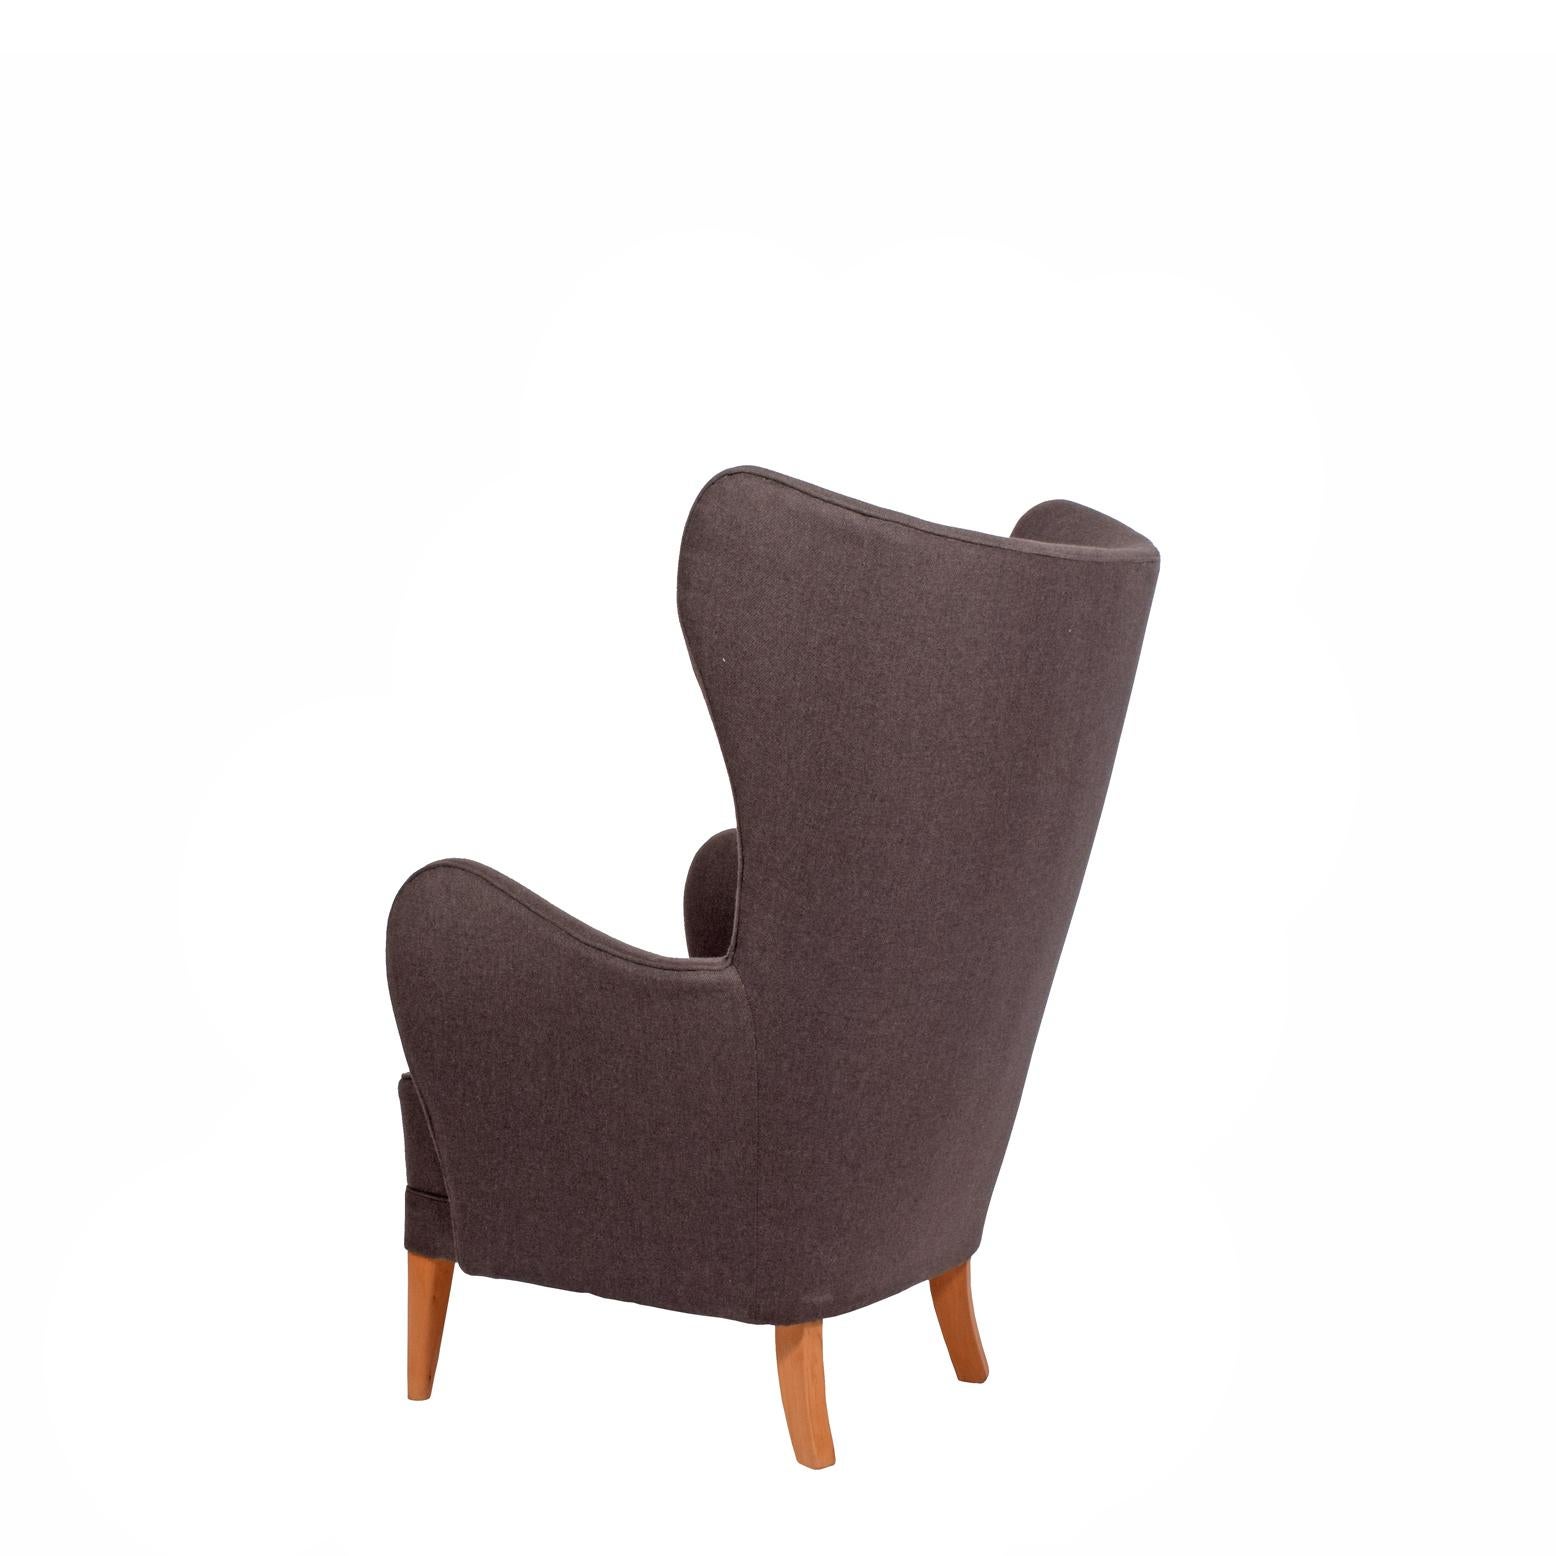 Danish 1940s Lounge Chair Flemming Lassen Attributed